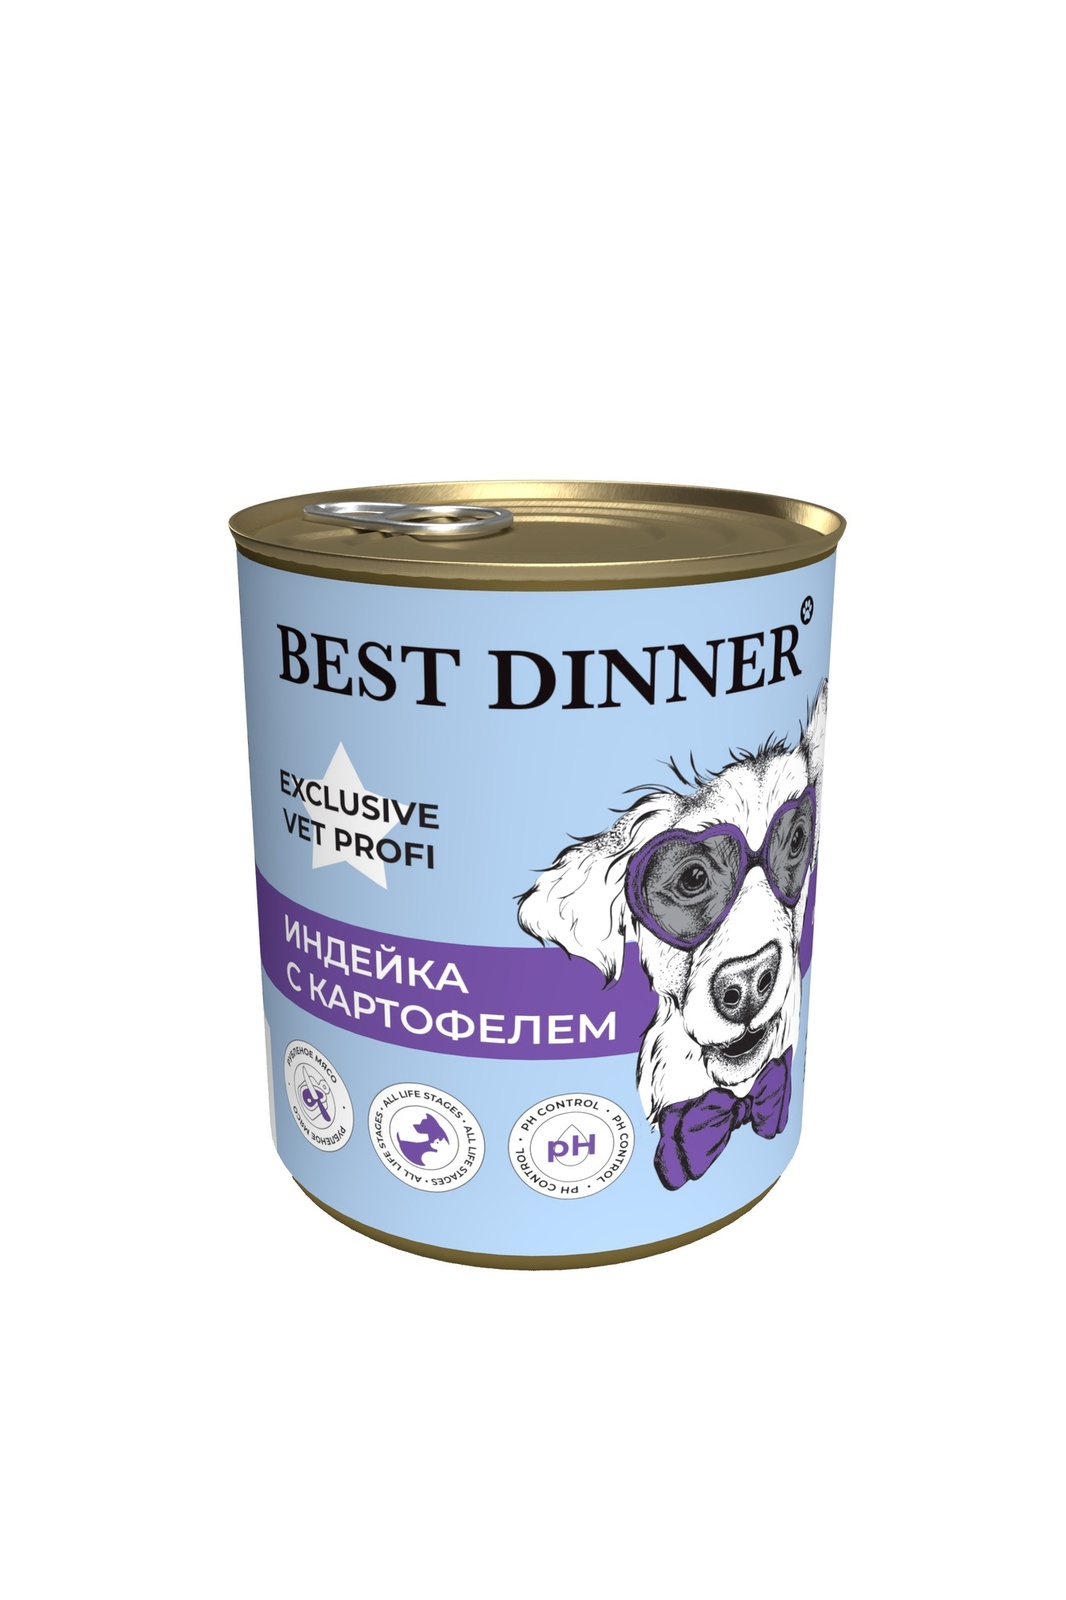 Best Dinner Best Dinner консервы для собак Exclusive Urinary Индейка с картофелем (340 г) best dinner best dinner консервы premium меню 3 с говядиной и кроликом 340 г